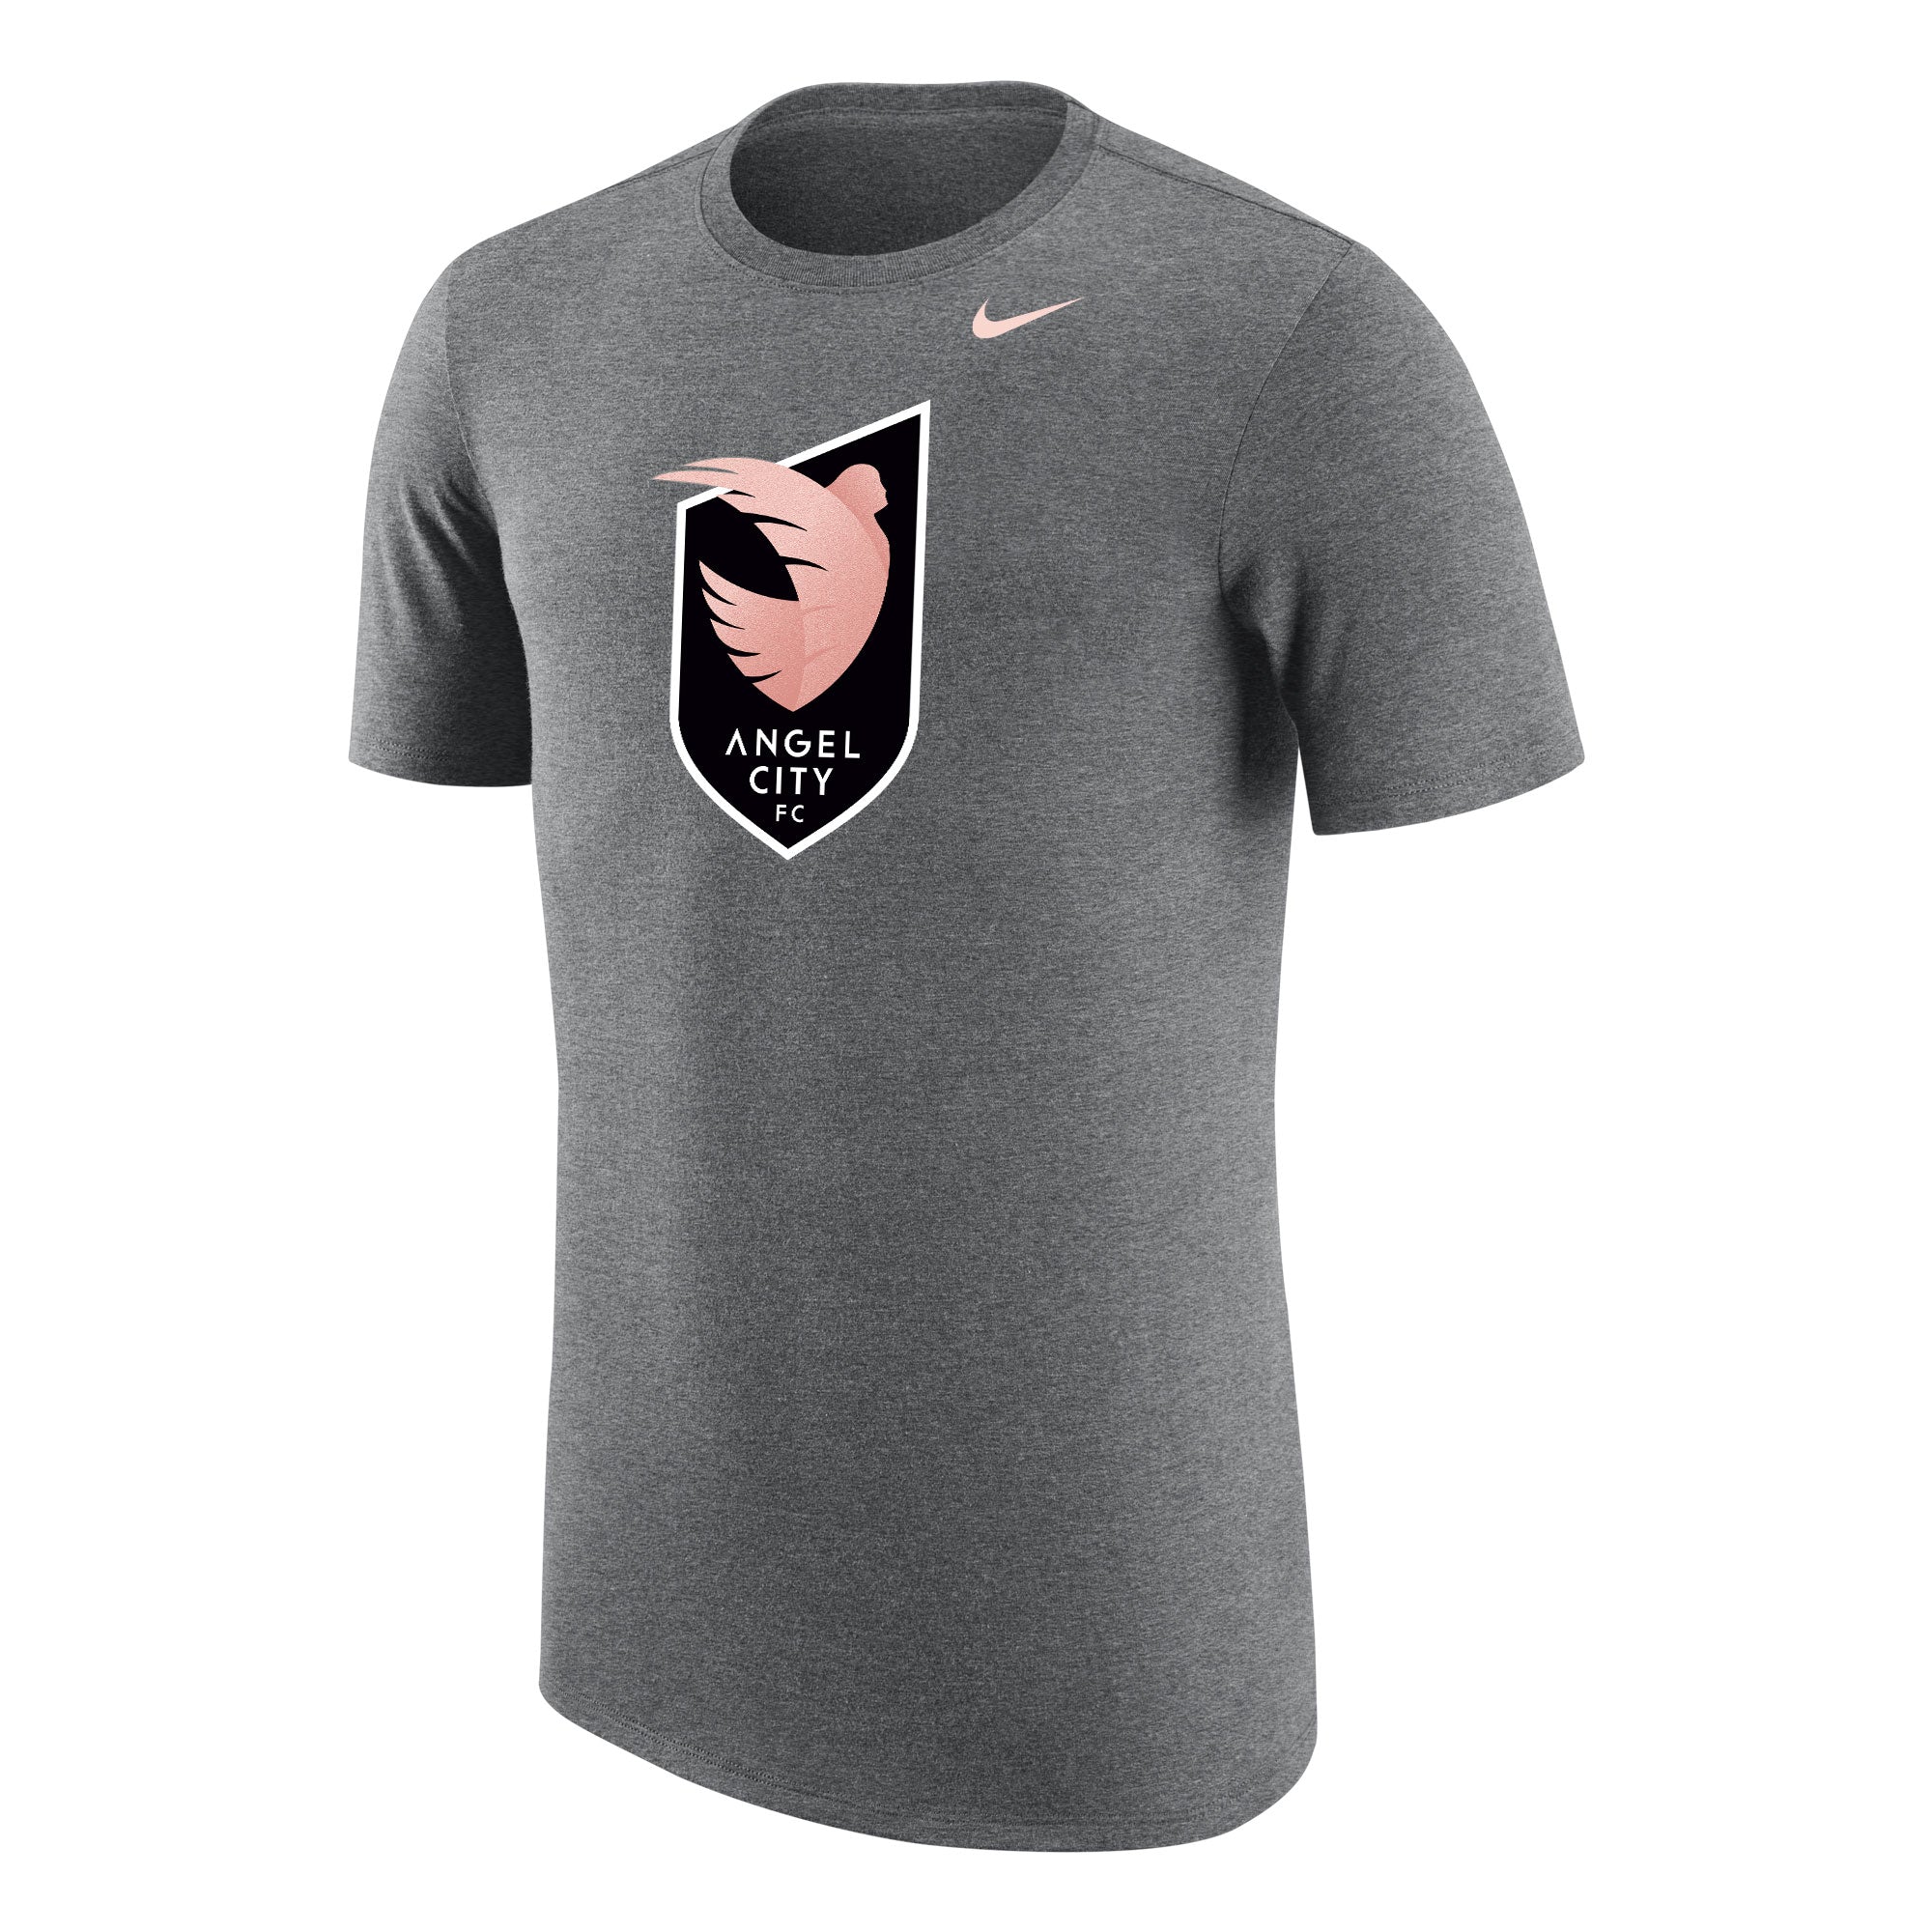 Angel City FC Nike Unisex Sol Rosa Crest Grey Tri-blend Shirt